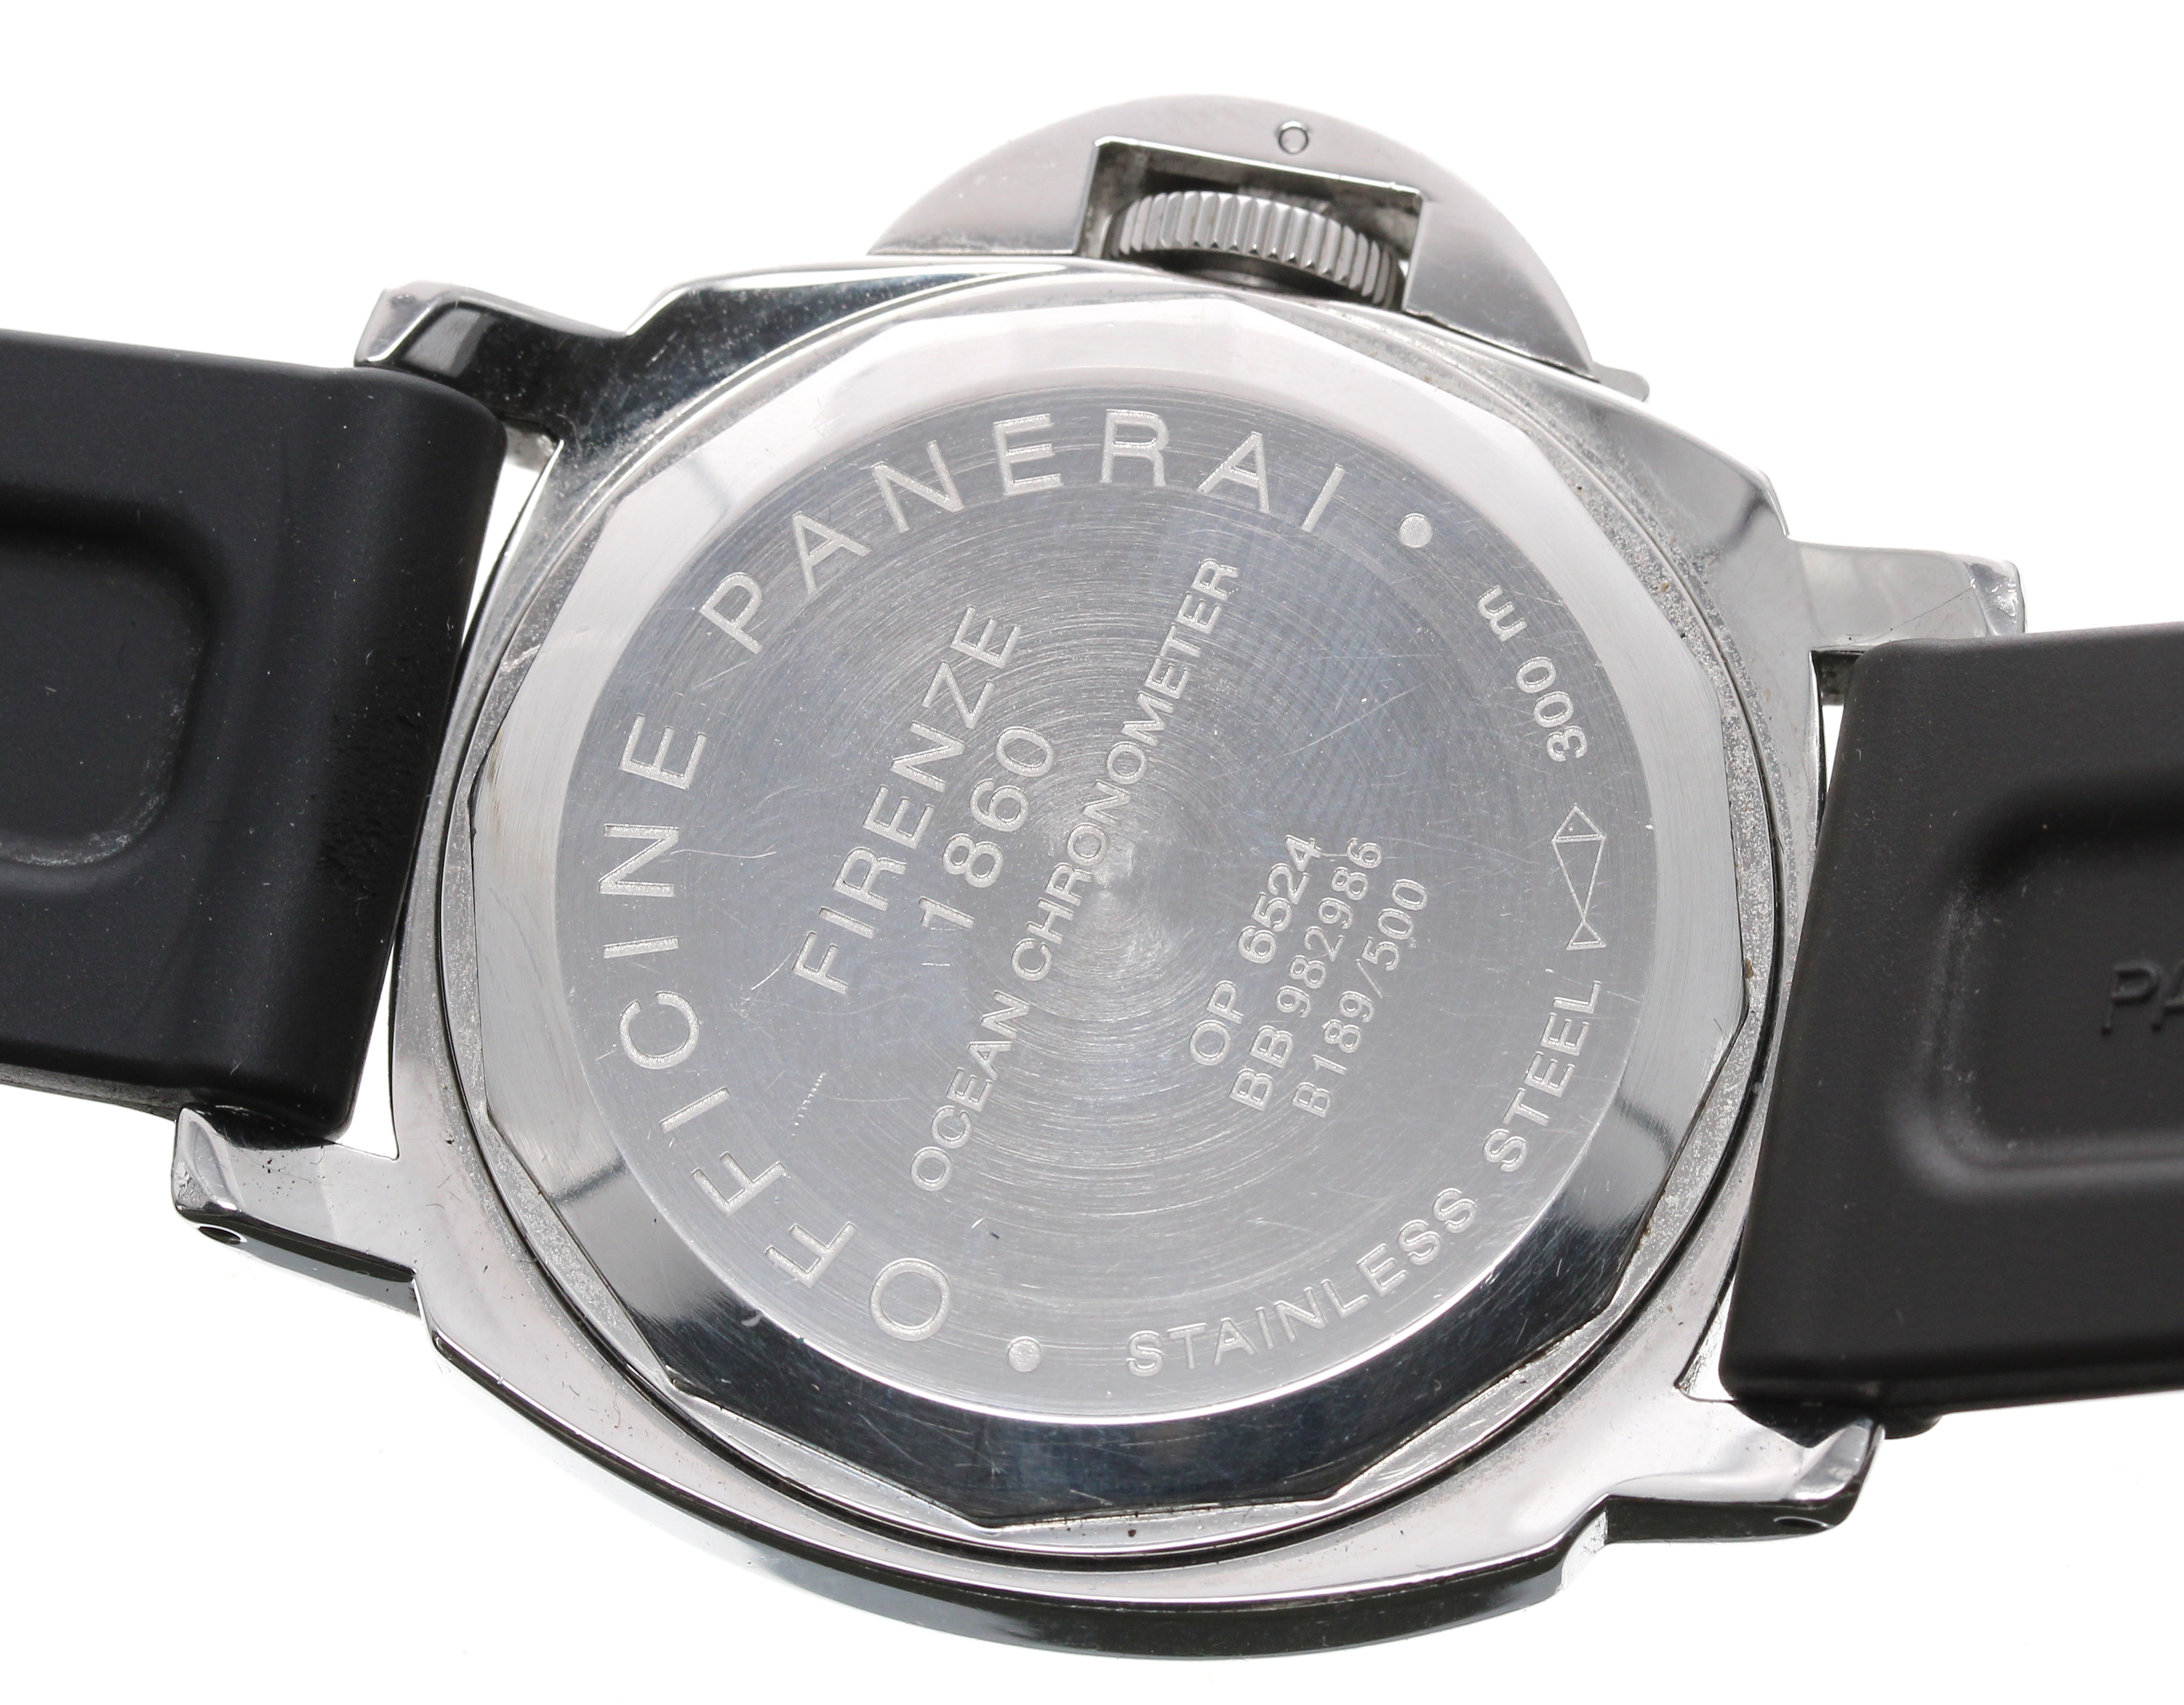 Panerai Luminor GMT (B Series) automatic stainless steel gentleman's wristwatch - Image 2 of 2